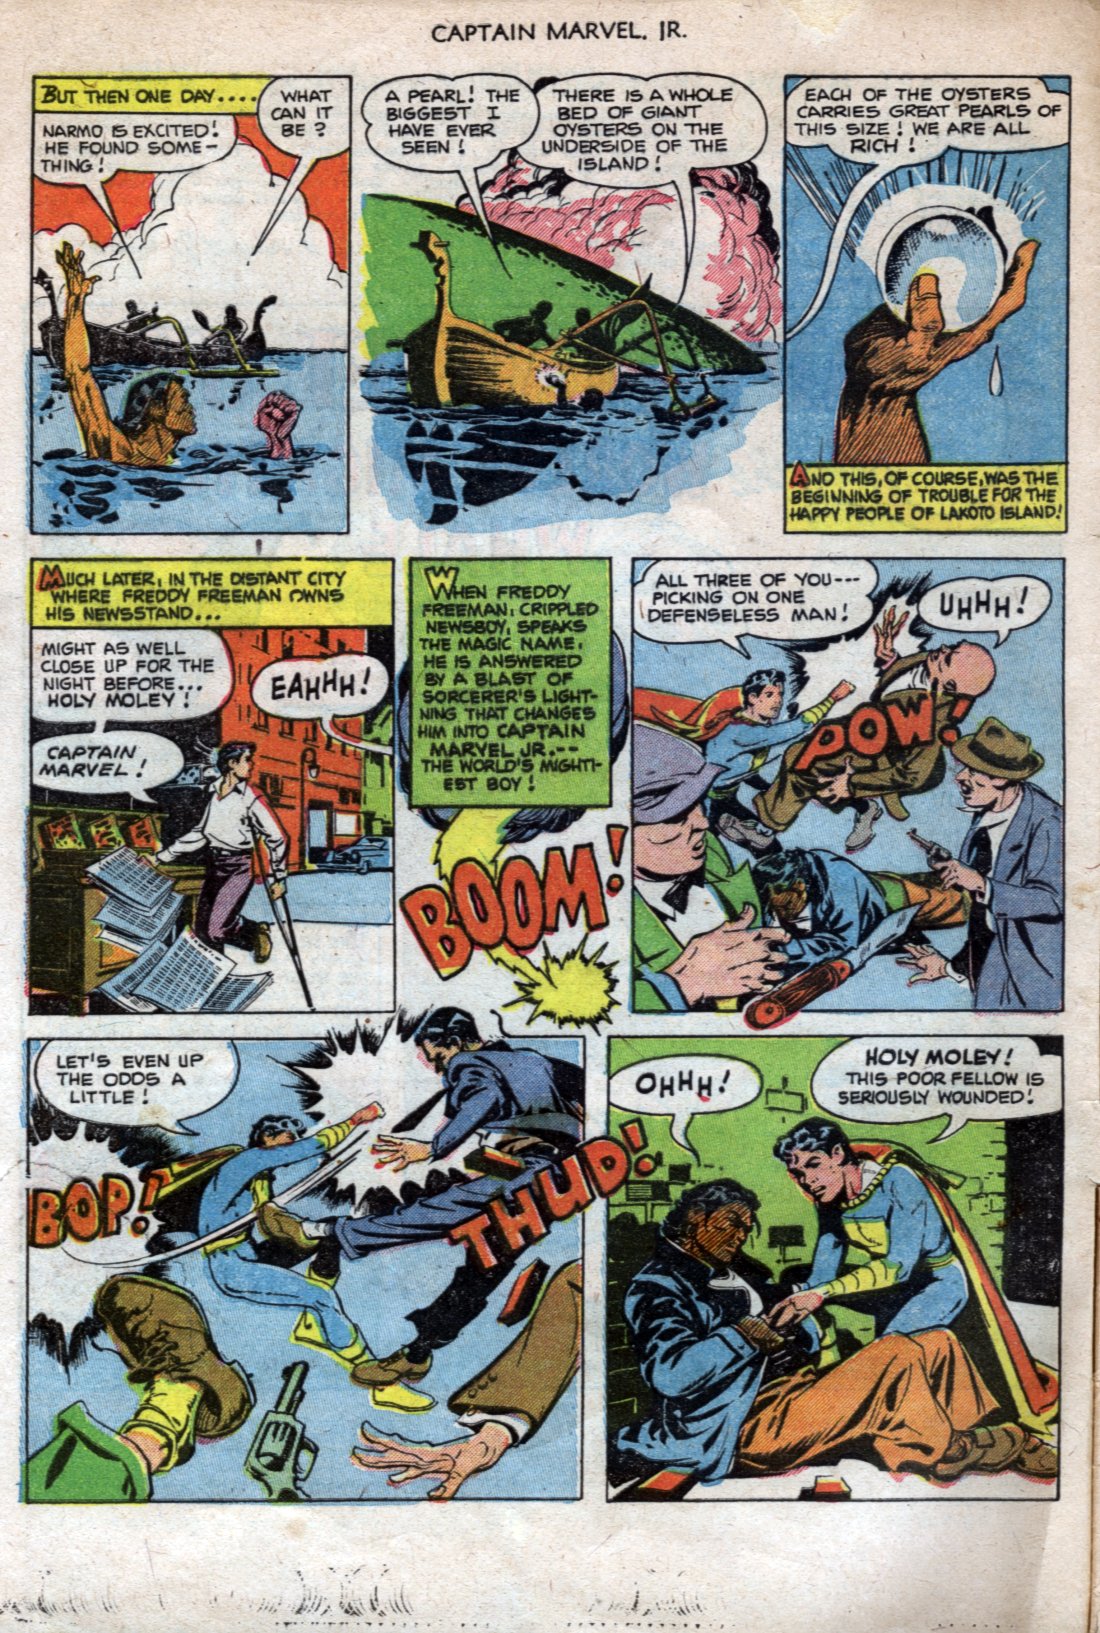 Read online Captain Marvel, Jr. comic -  Issue #107 - 4